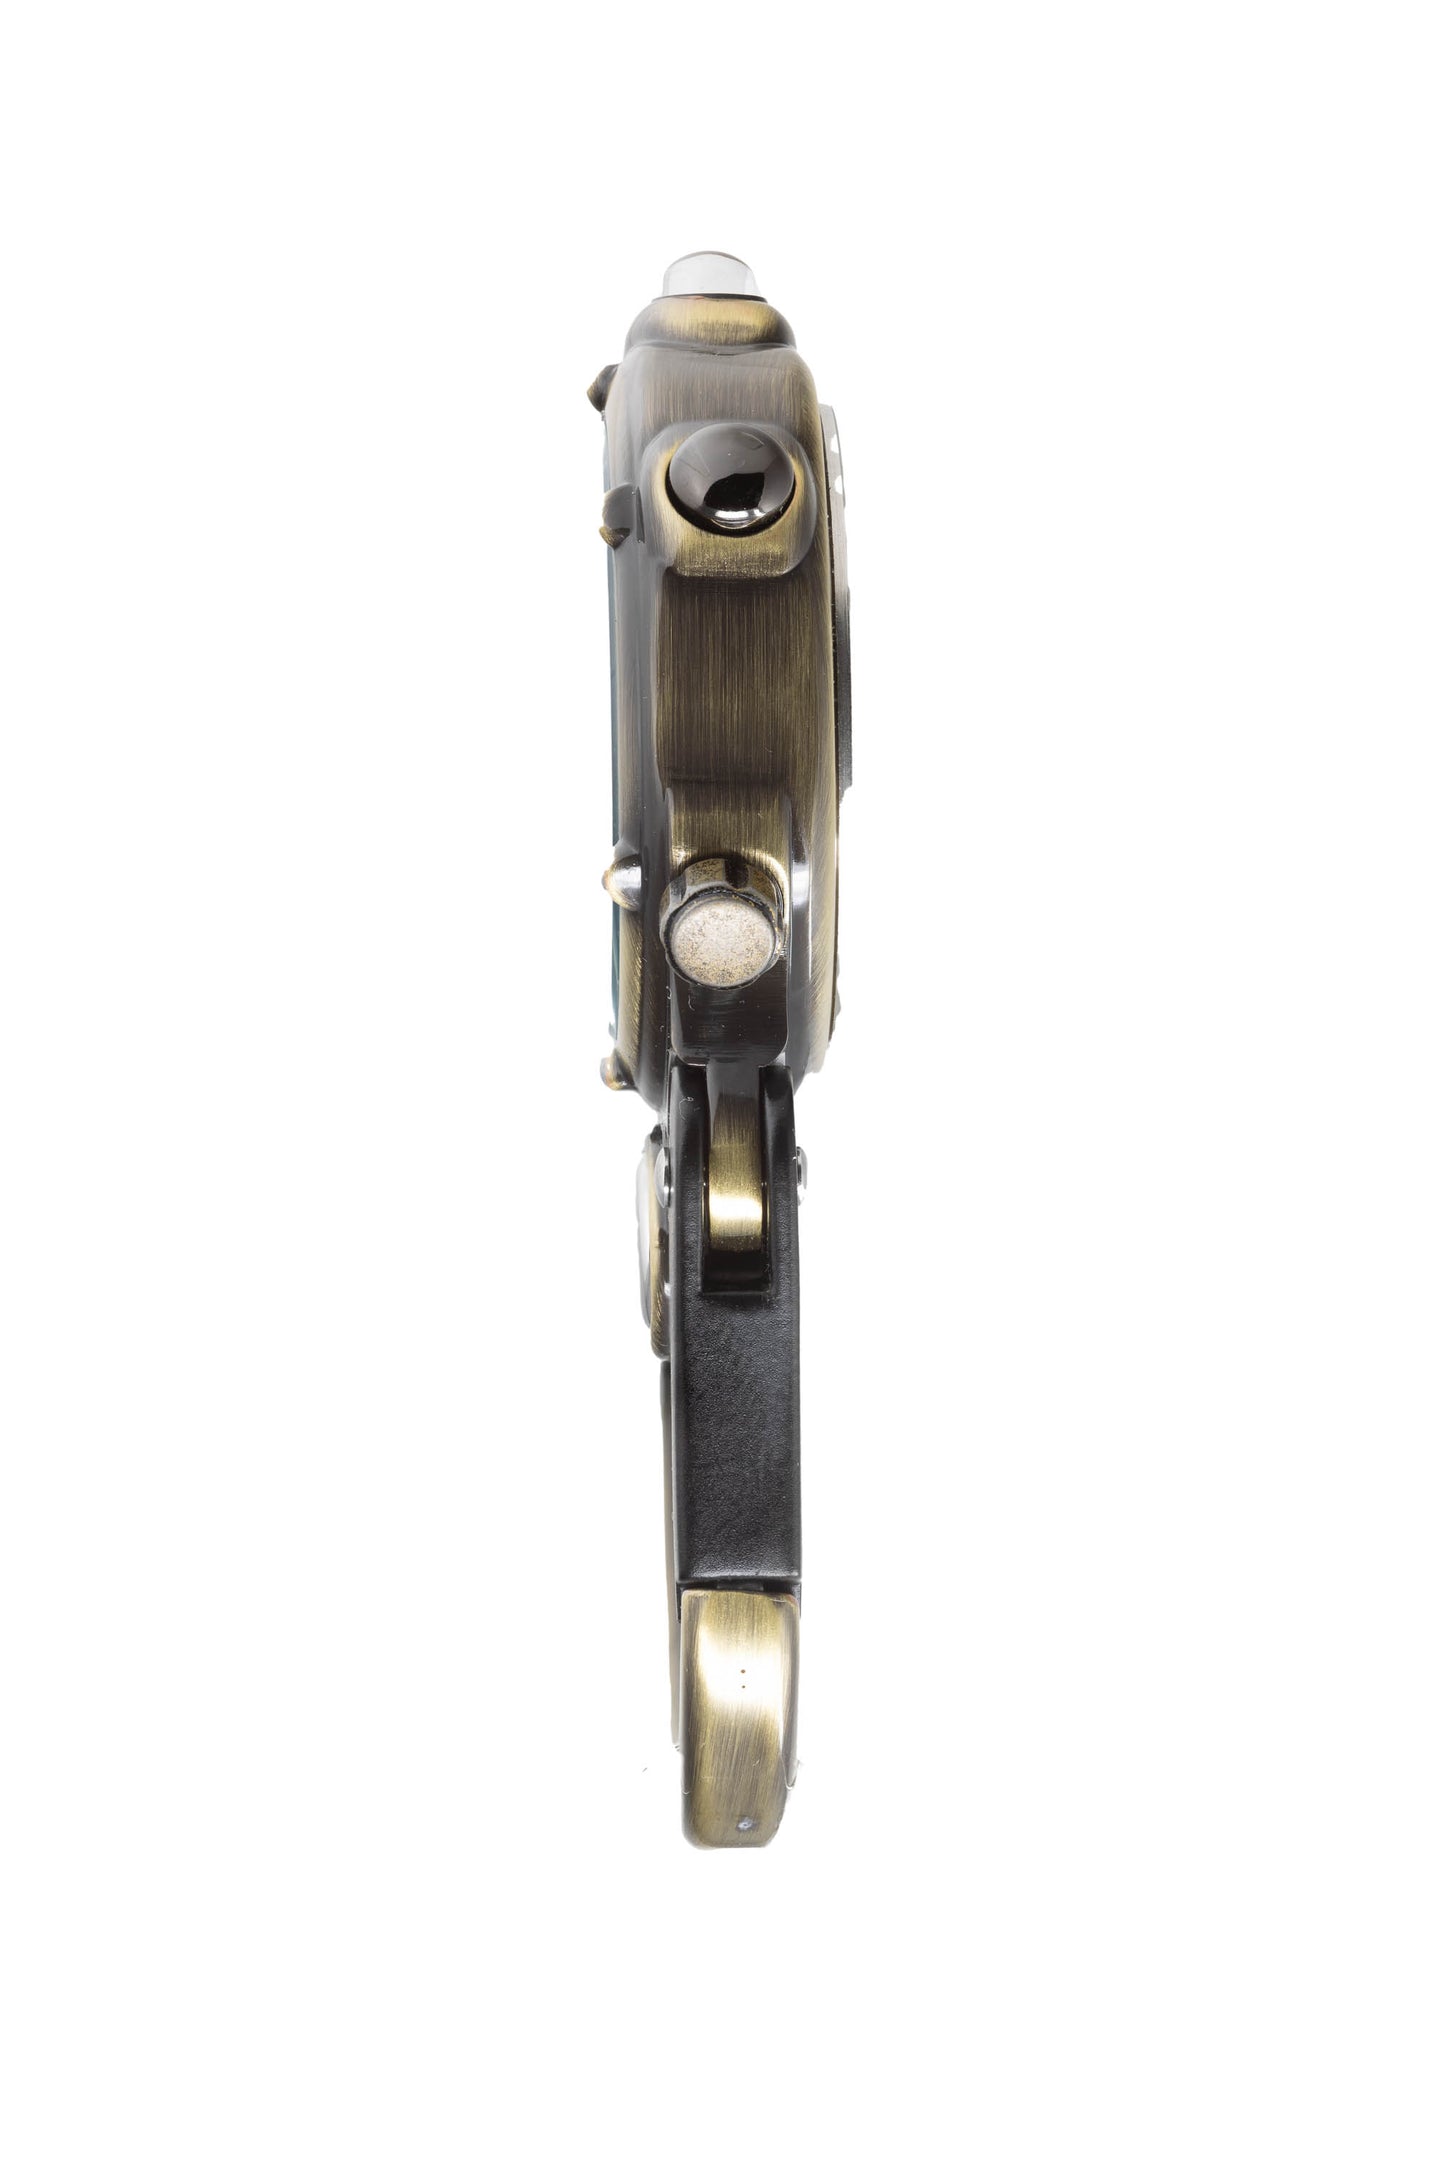 Miniclip Microlight - Antique Brass Case Cream Dial